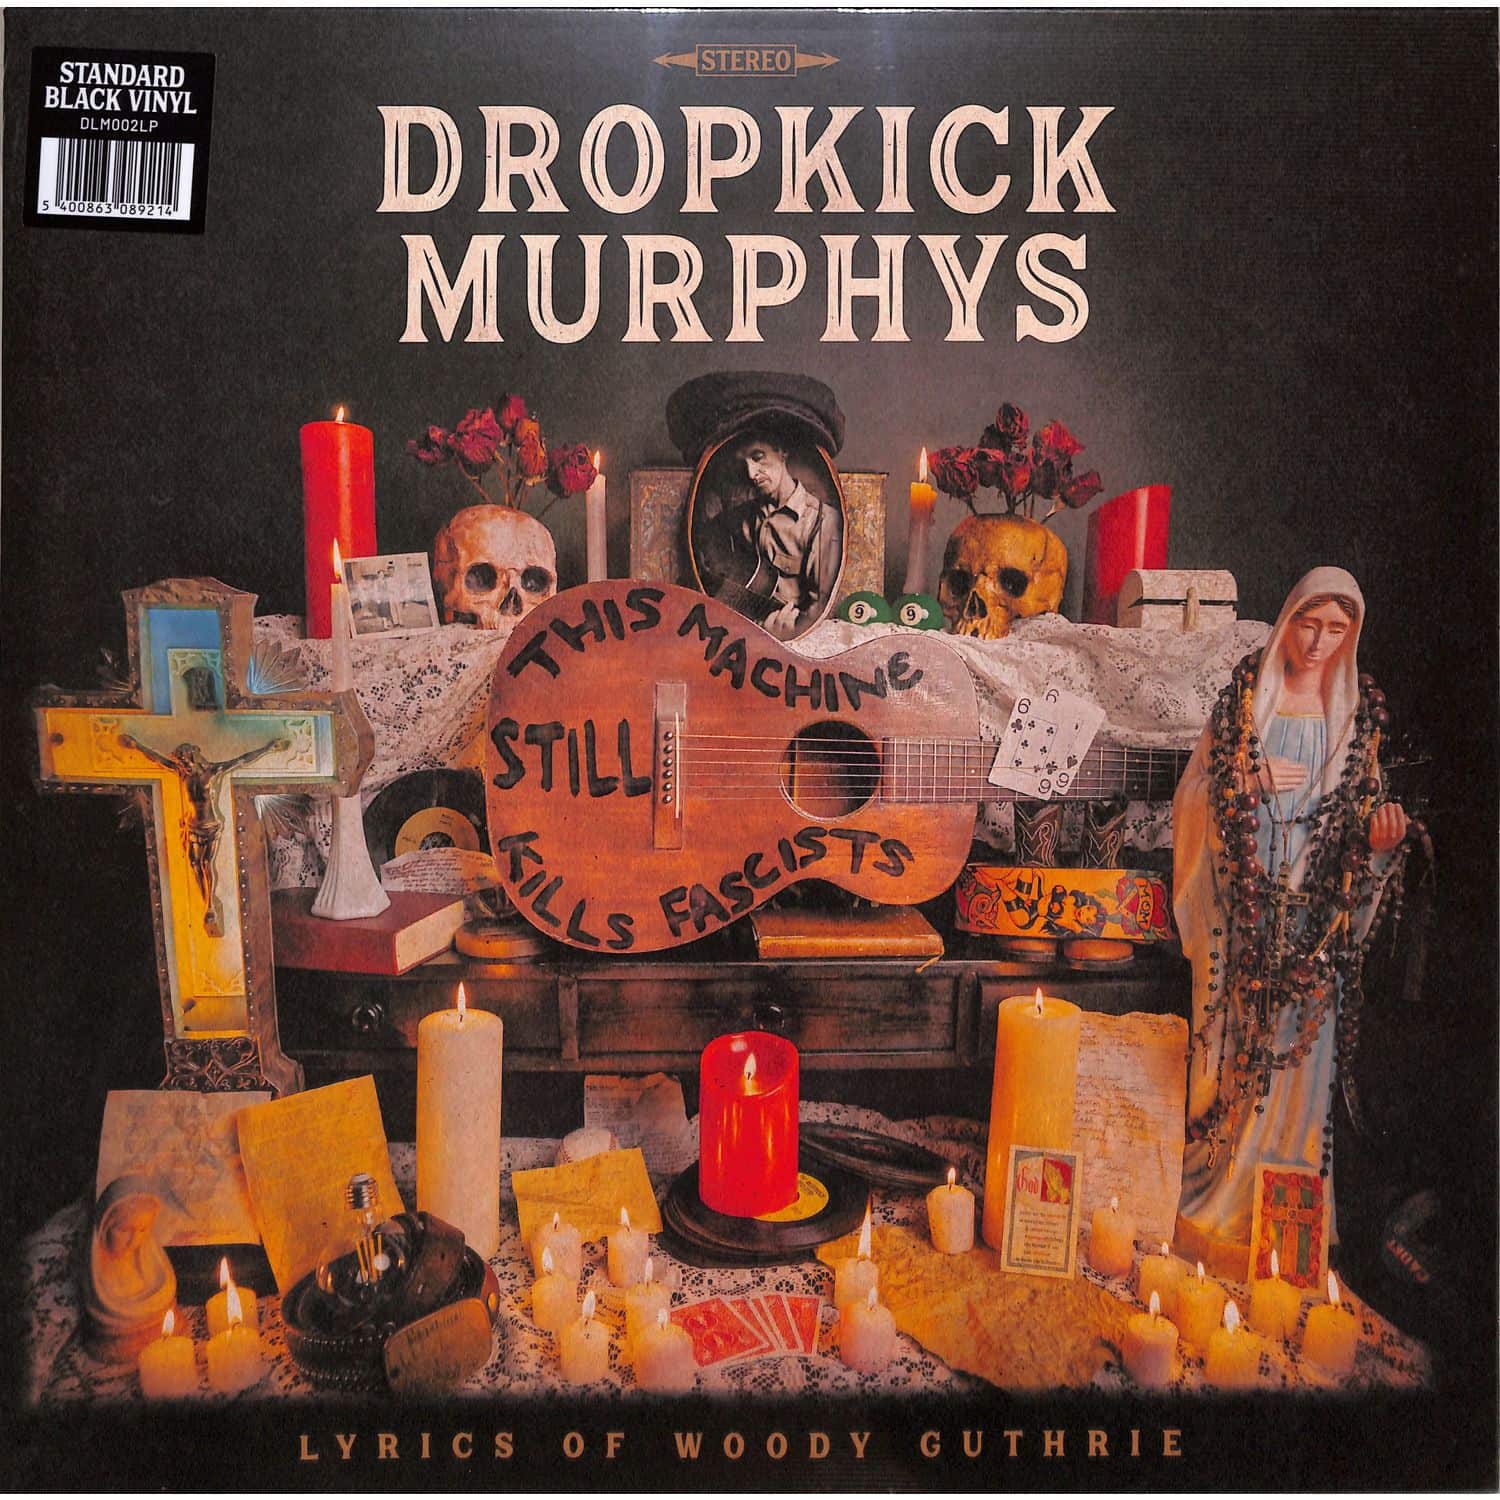 Dropkick Murphys Feat. Woody Guthrie - THIS MACHINE STILL KILLS FASCISTS 